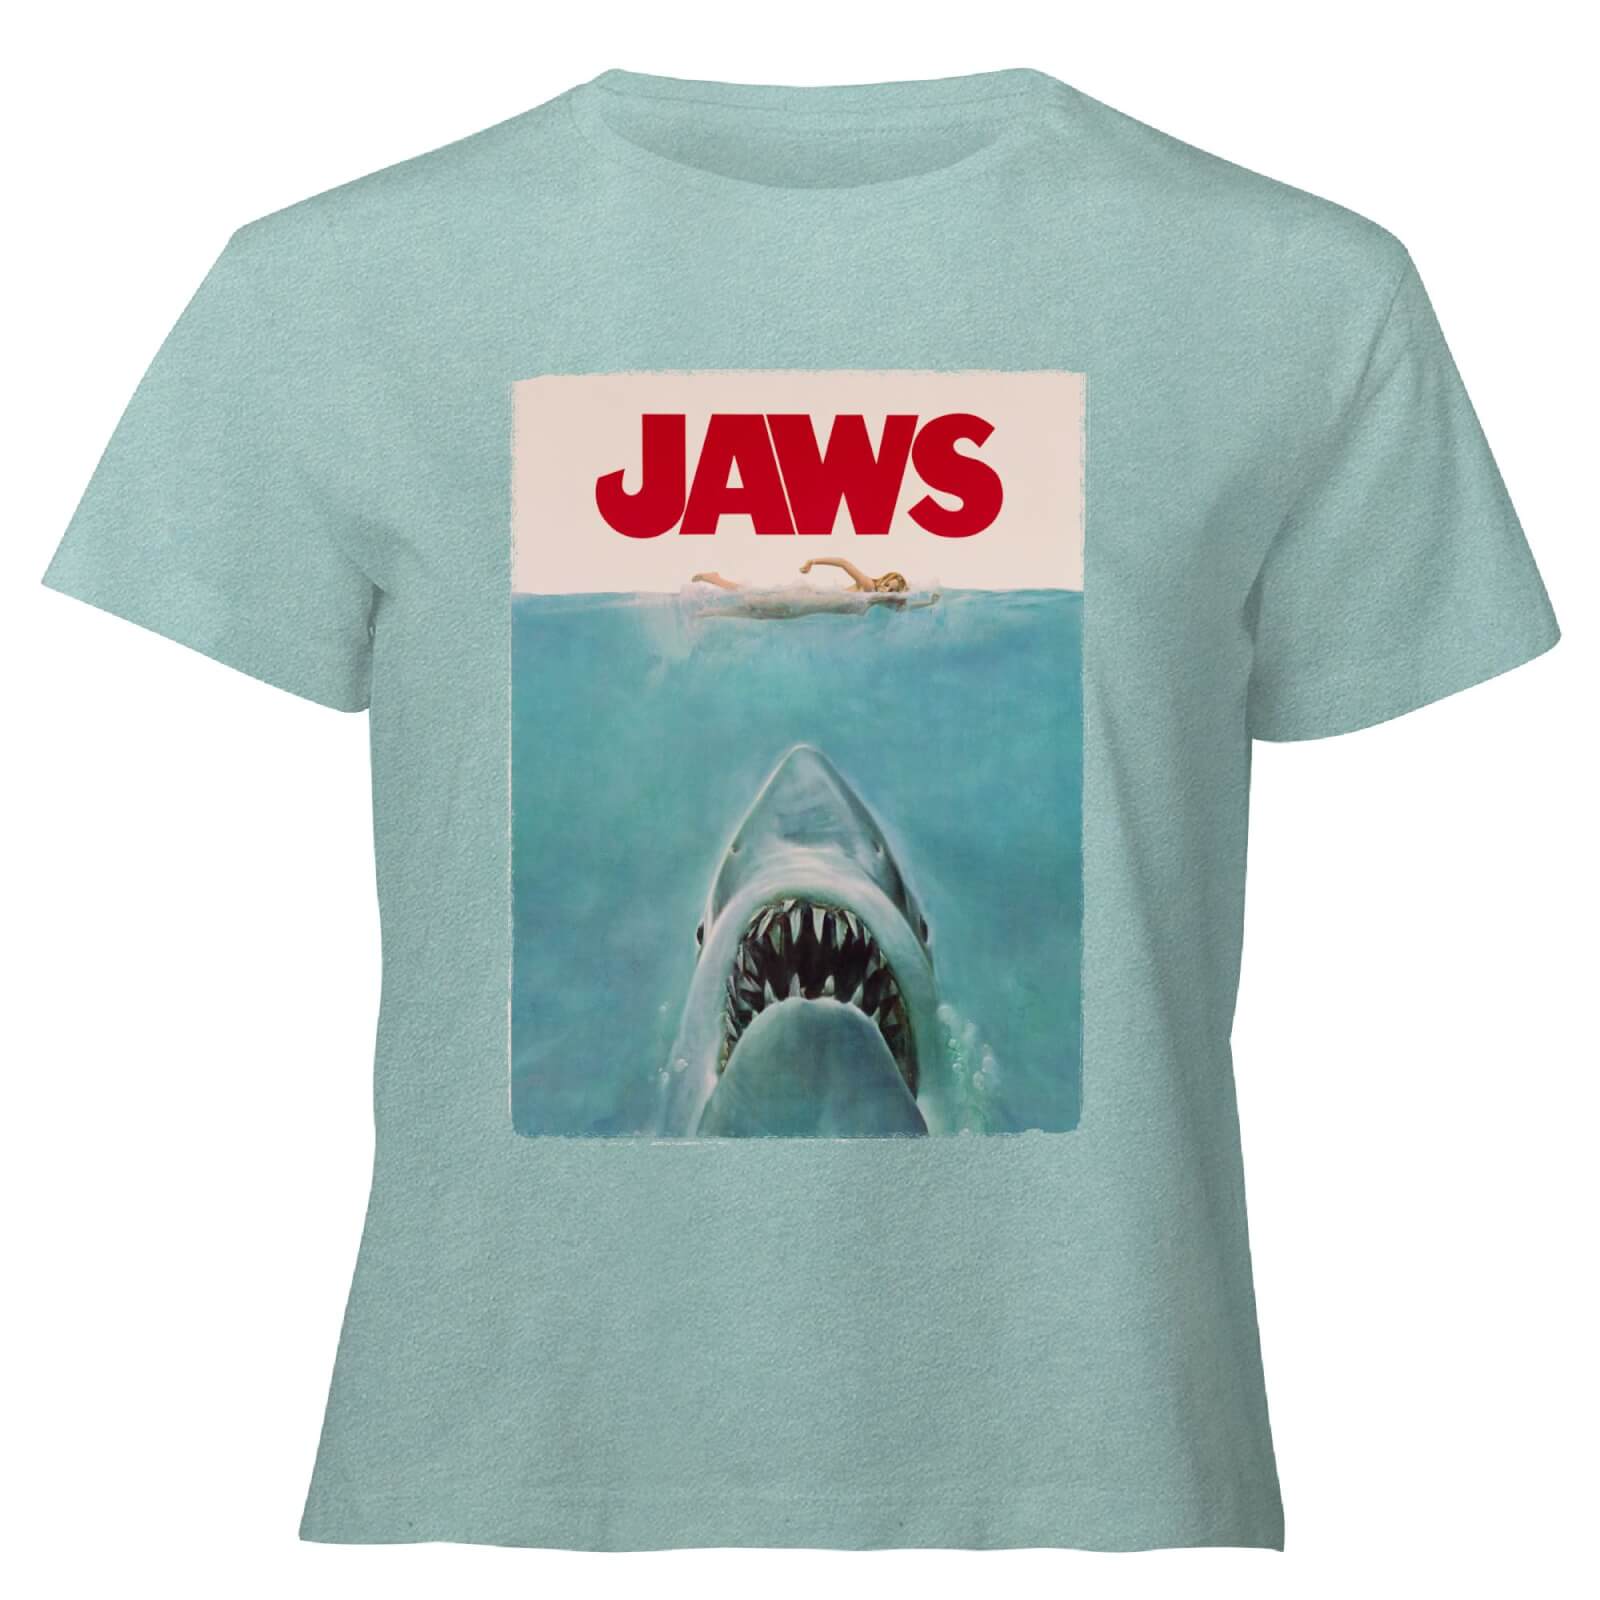 Jaws Classic Poster - Women's Cropped T-Shirt - Mint Acid Wash - XS - Mint Acid Wash